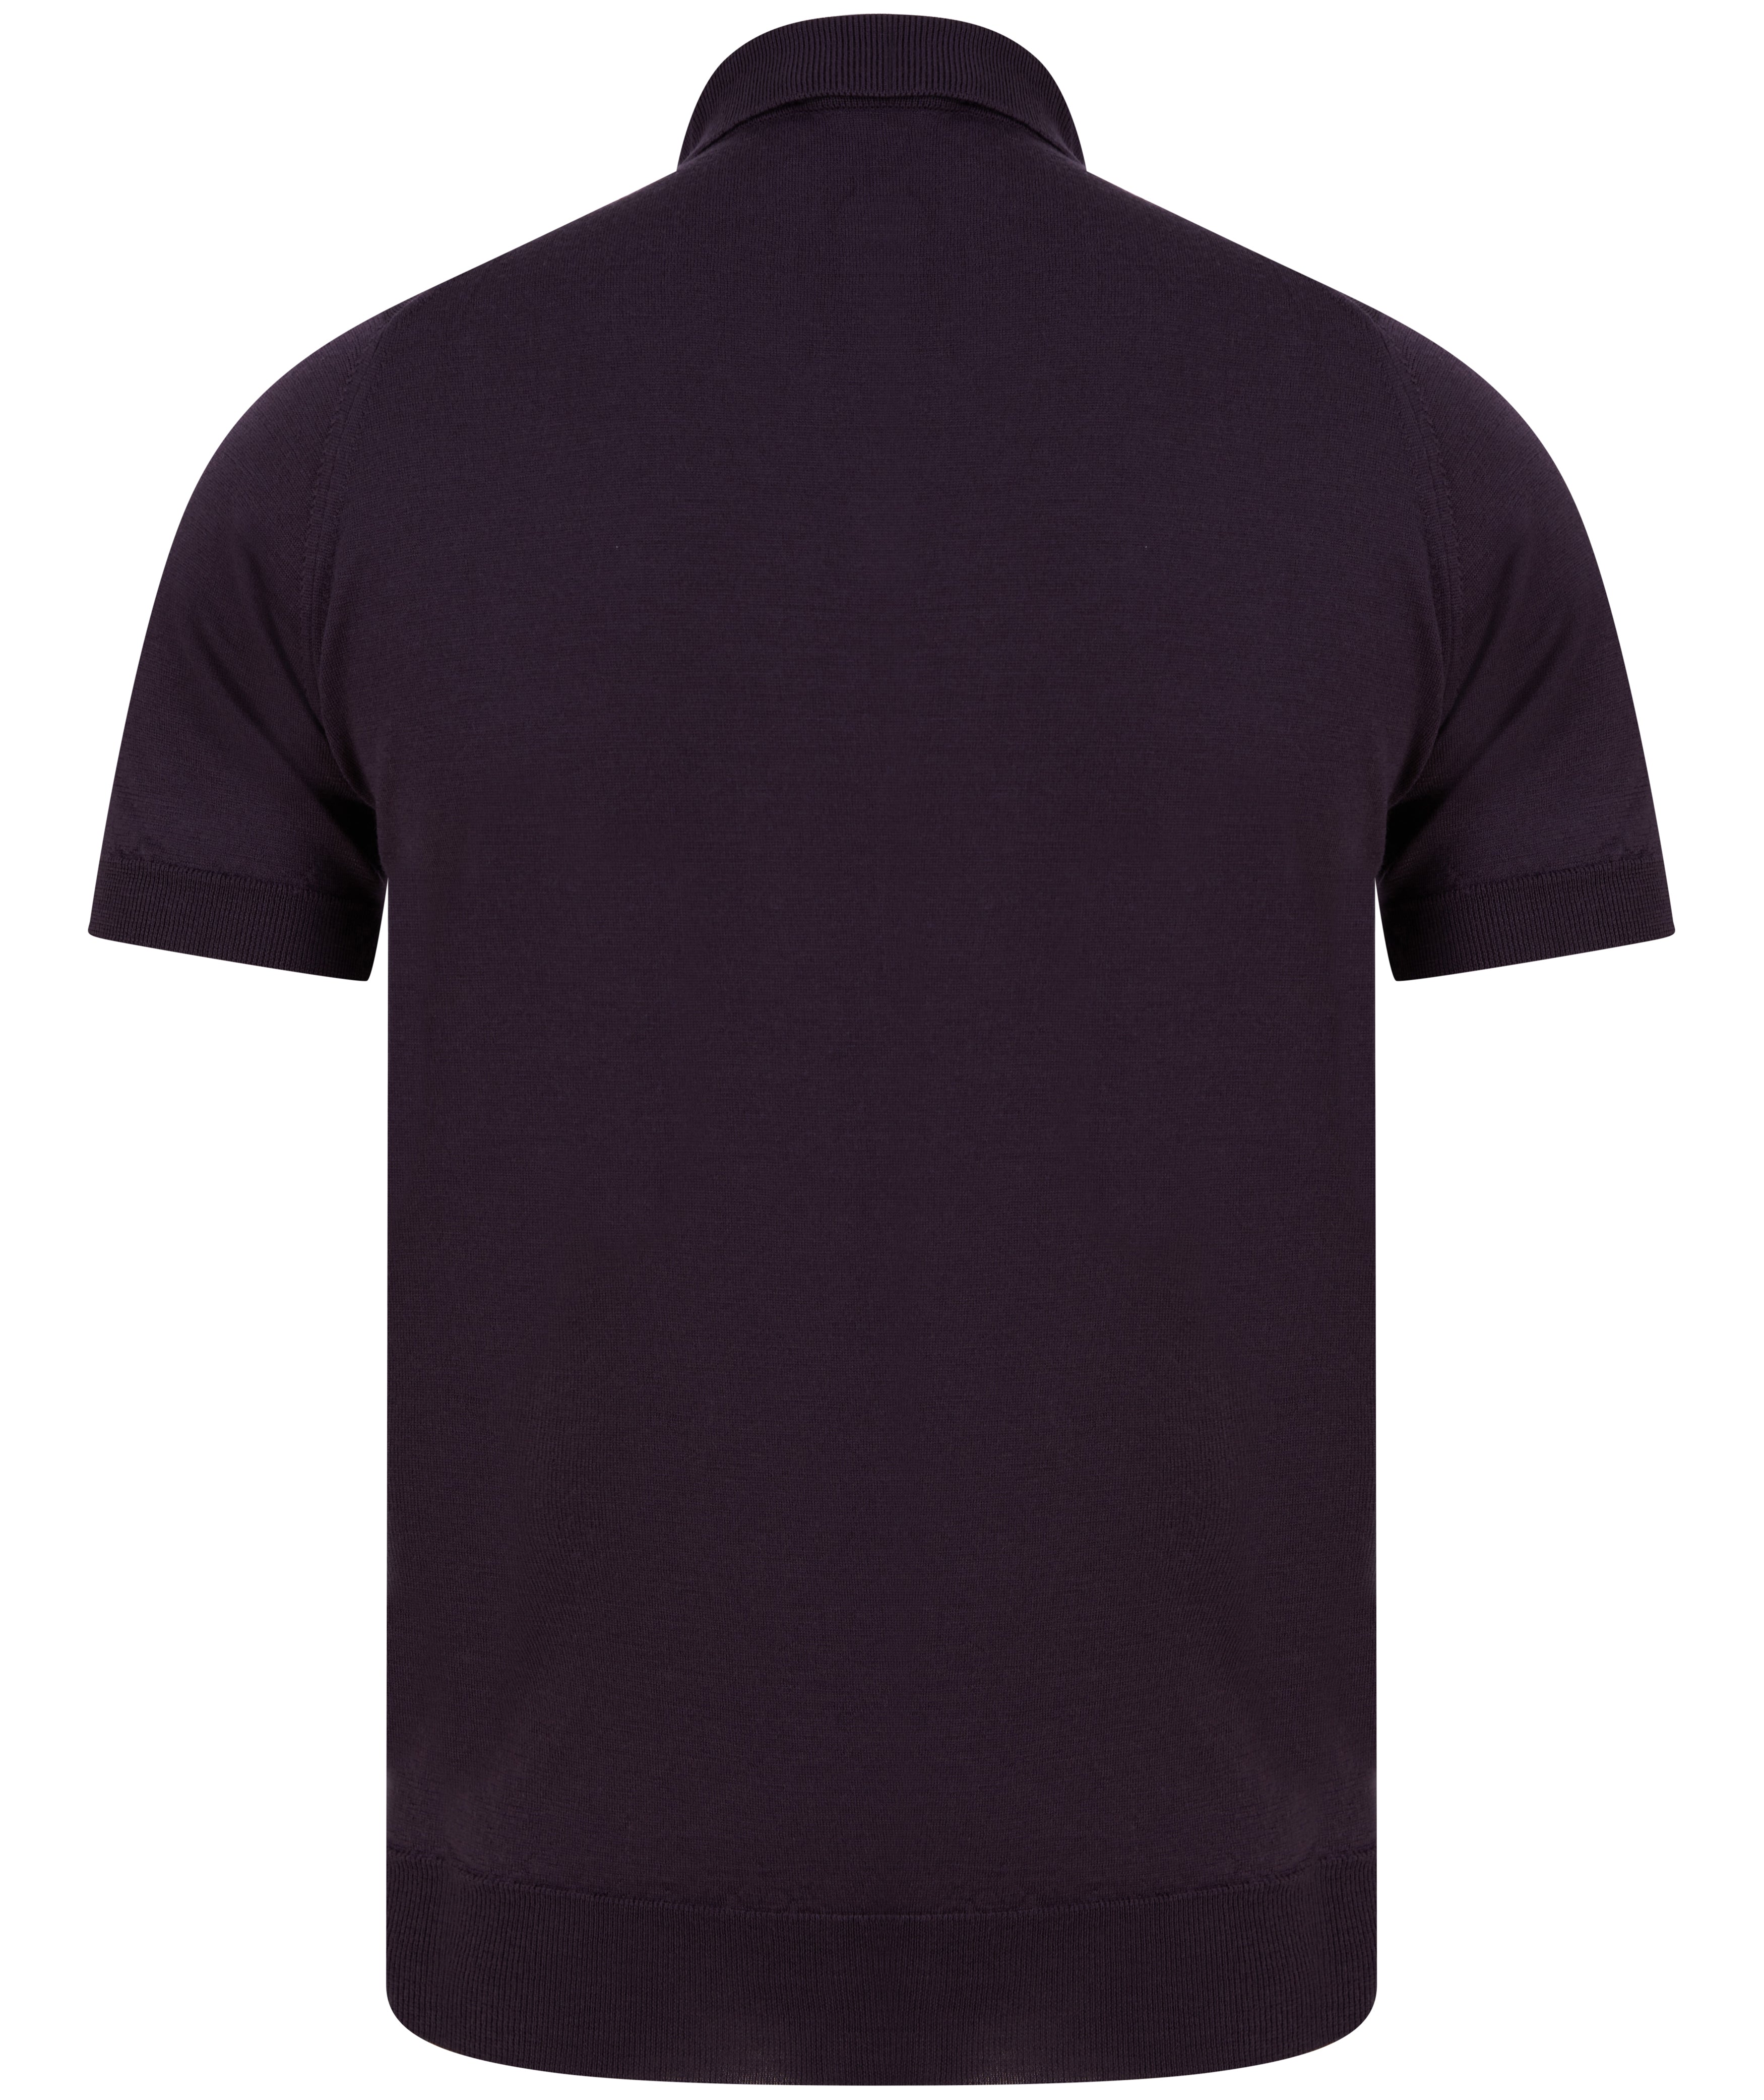 Load image into Gallery viewer, John Smedley Payton Polo Shirt Purple
